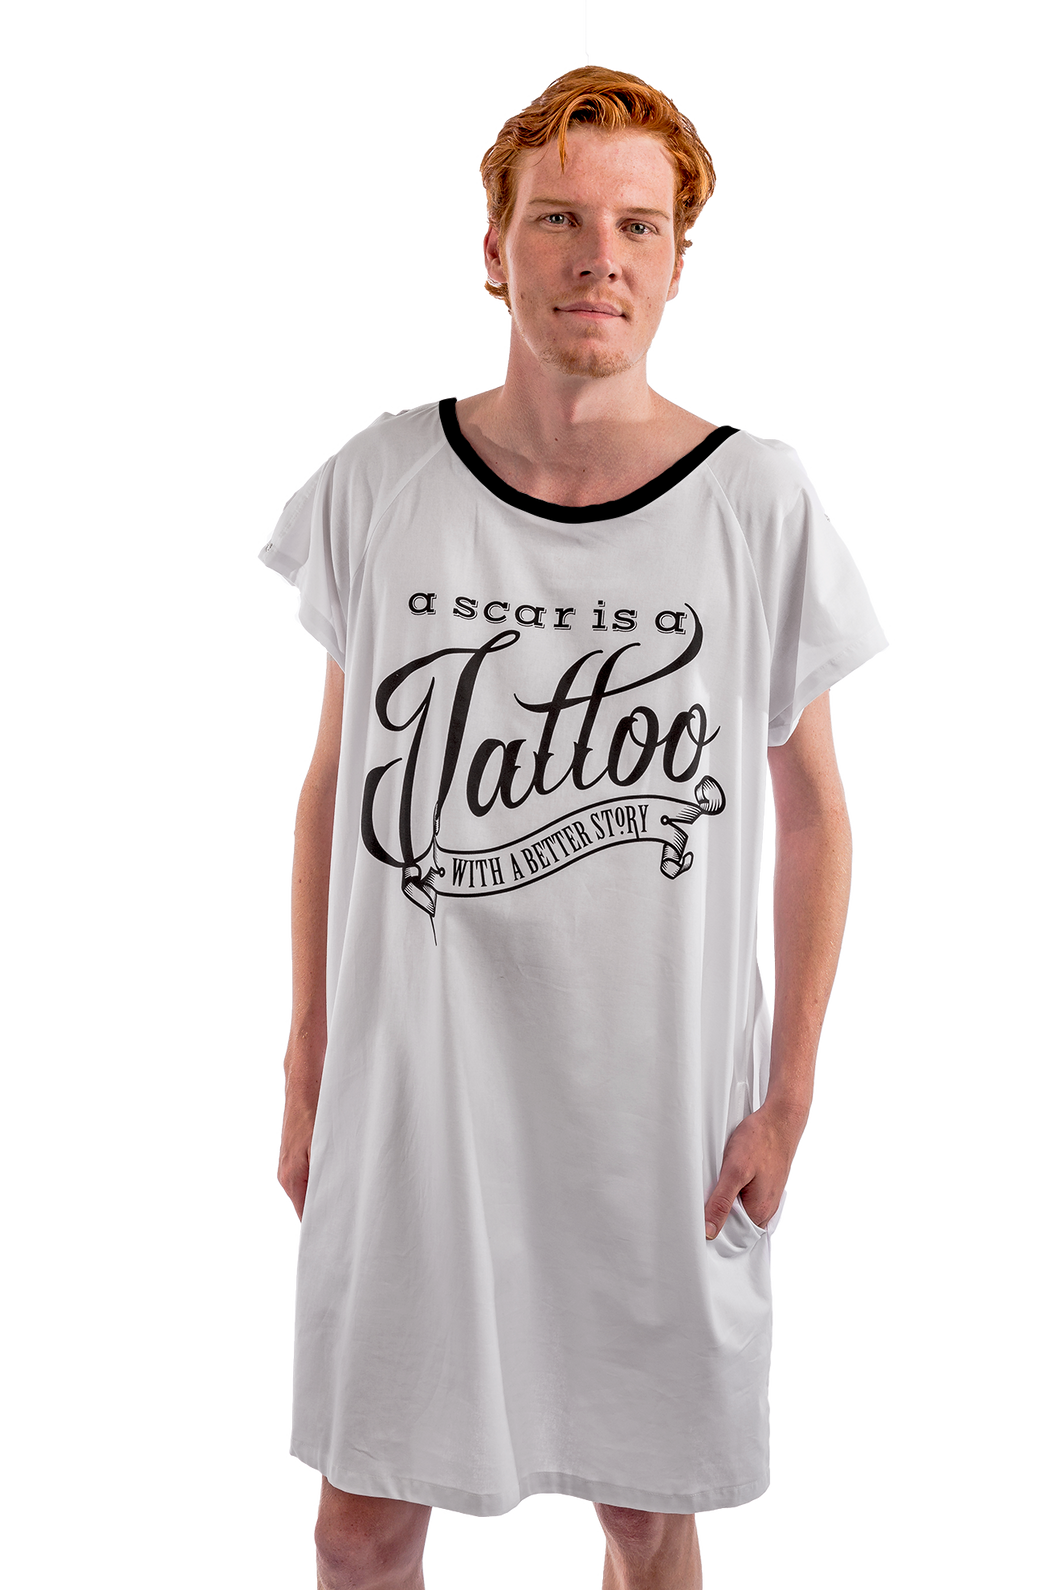 Tattoo (white)